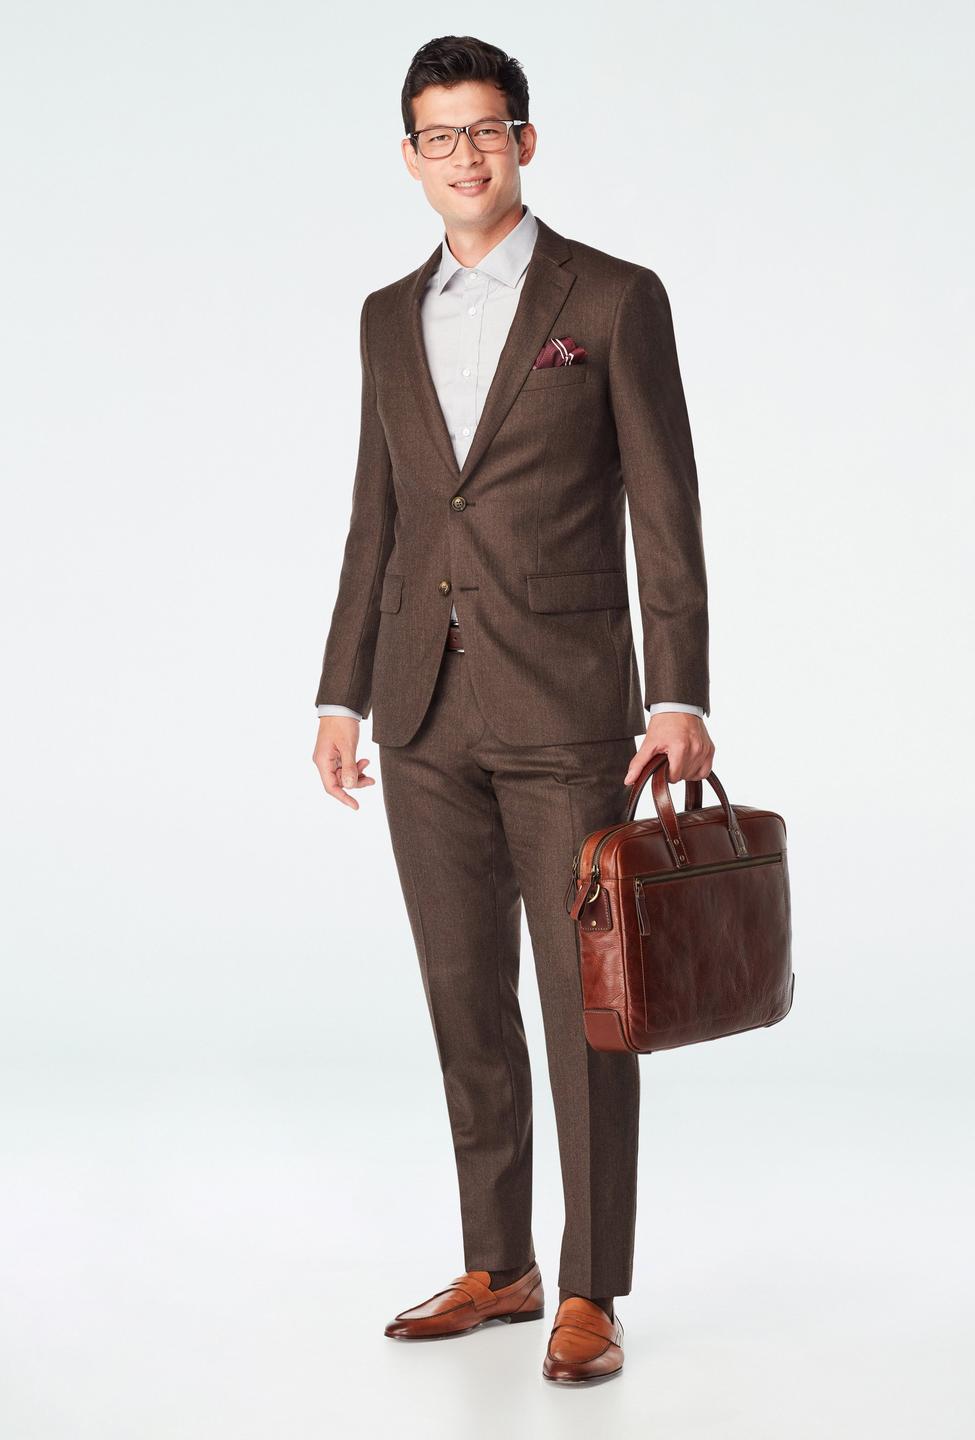 Brown suit - Prescot Herringbone Design from Seasonal Indochino Collection